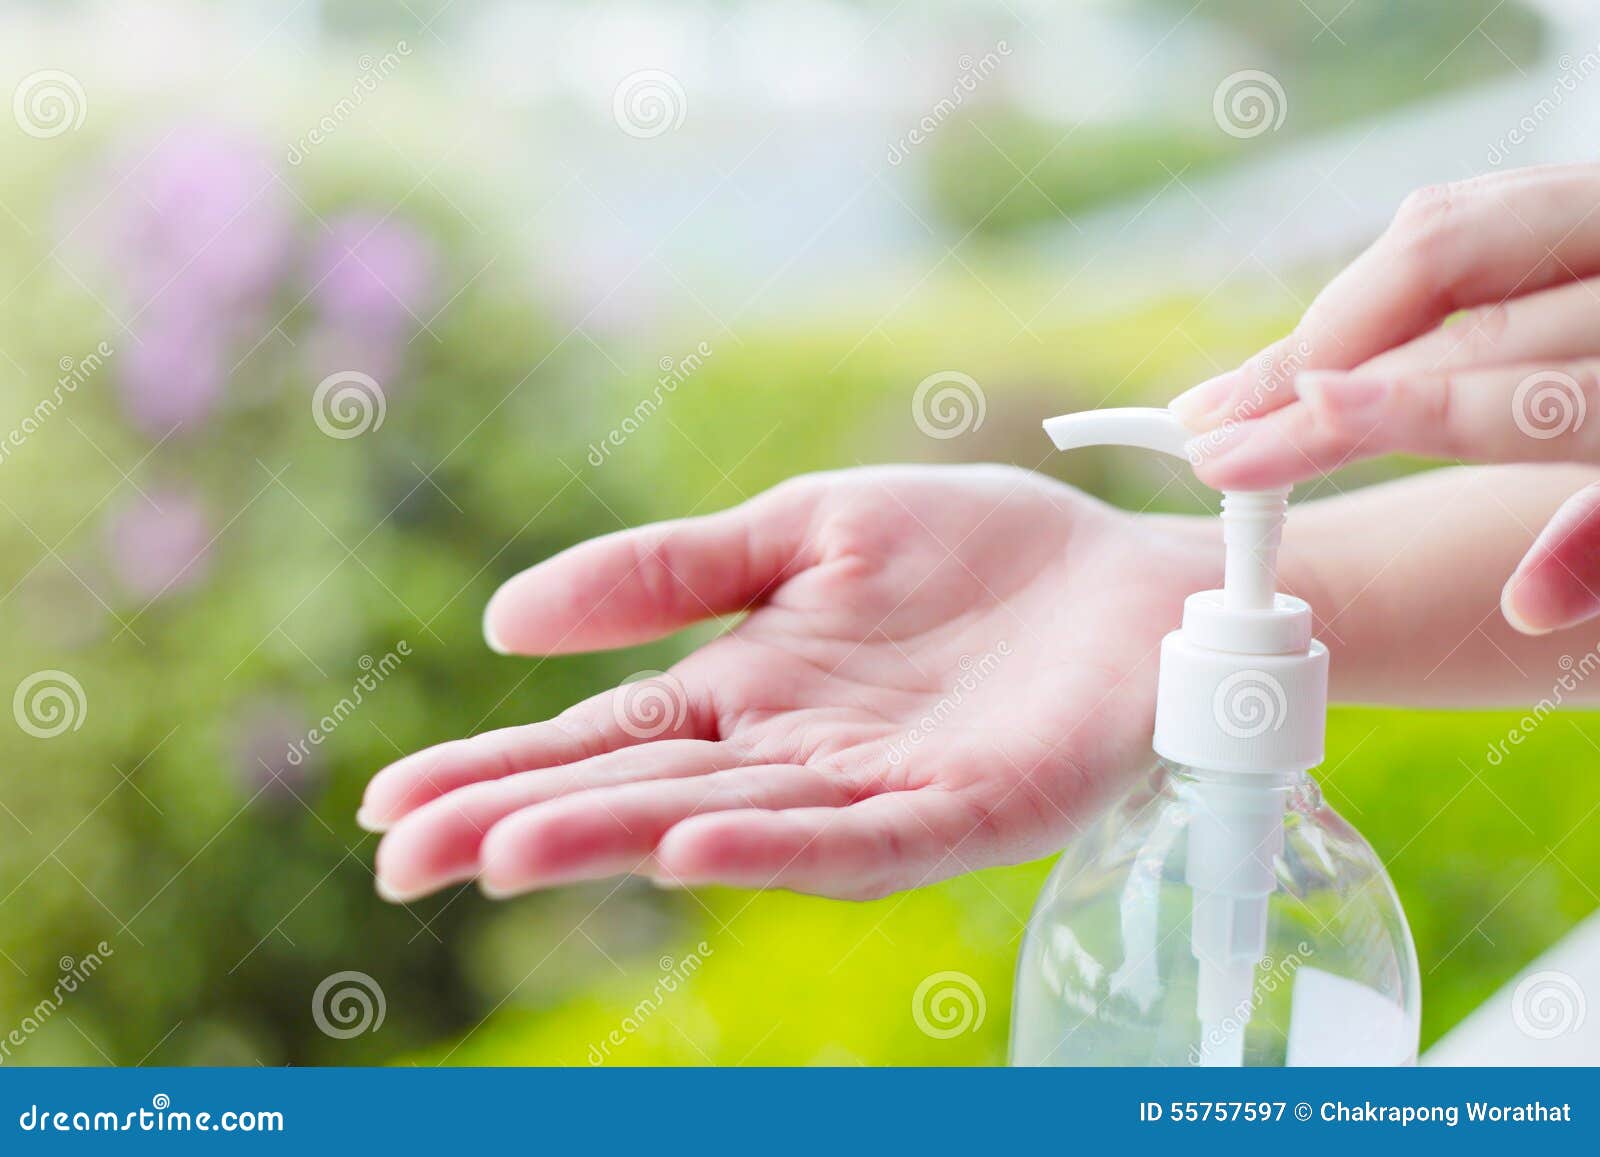 female hands using wash hand sanitizer gel pump dispenser.